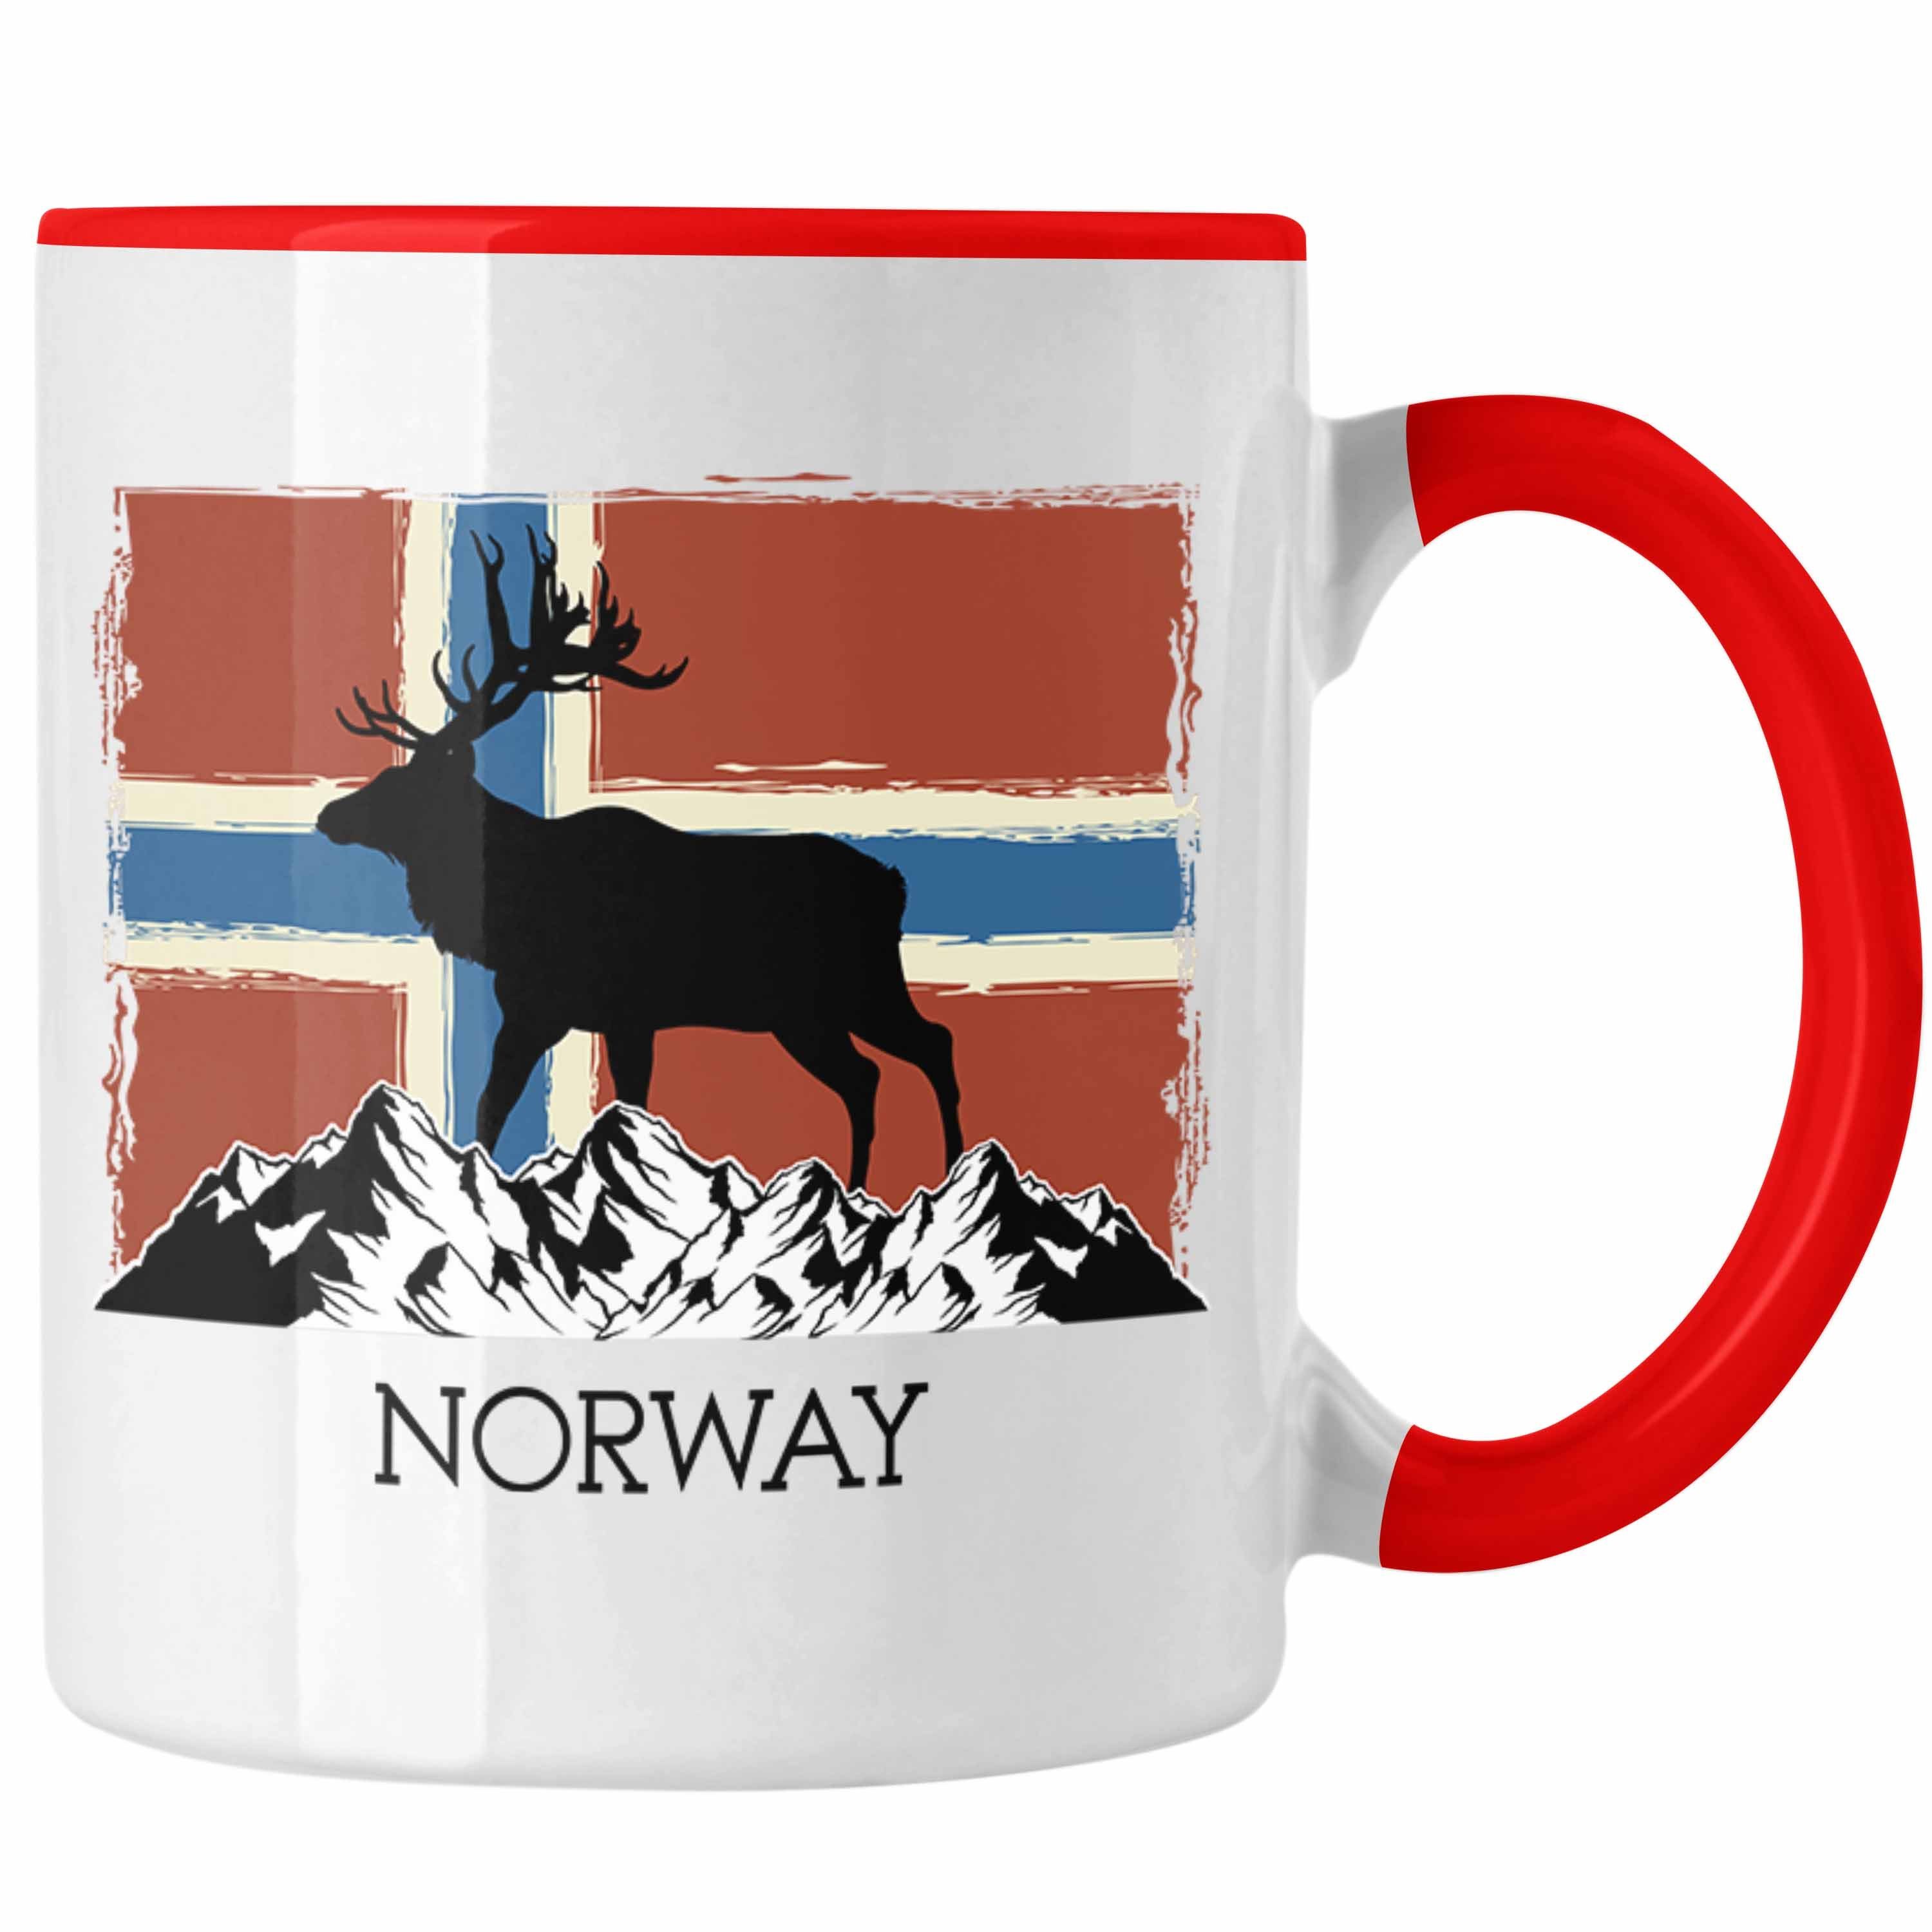 Trendation Tasse Trendation - Norwegen Geschenke Tasse Flagge Nordkap Elch Norway Rot